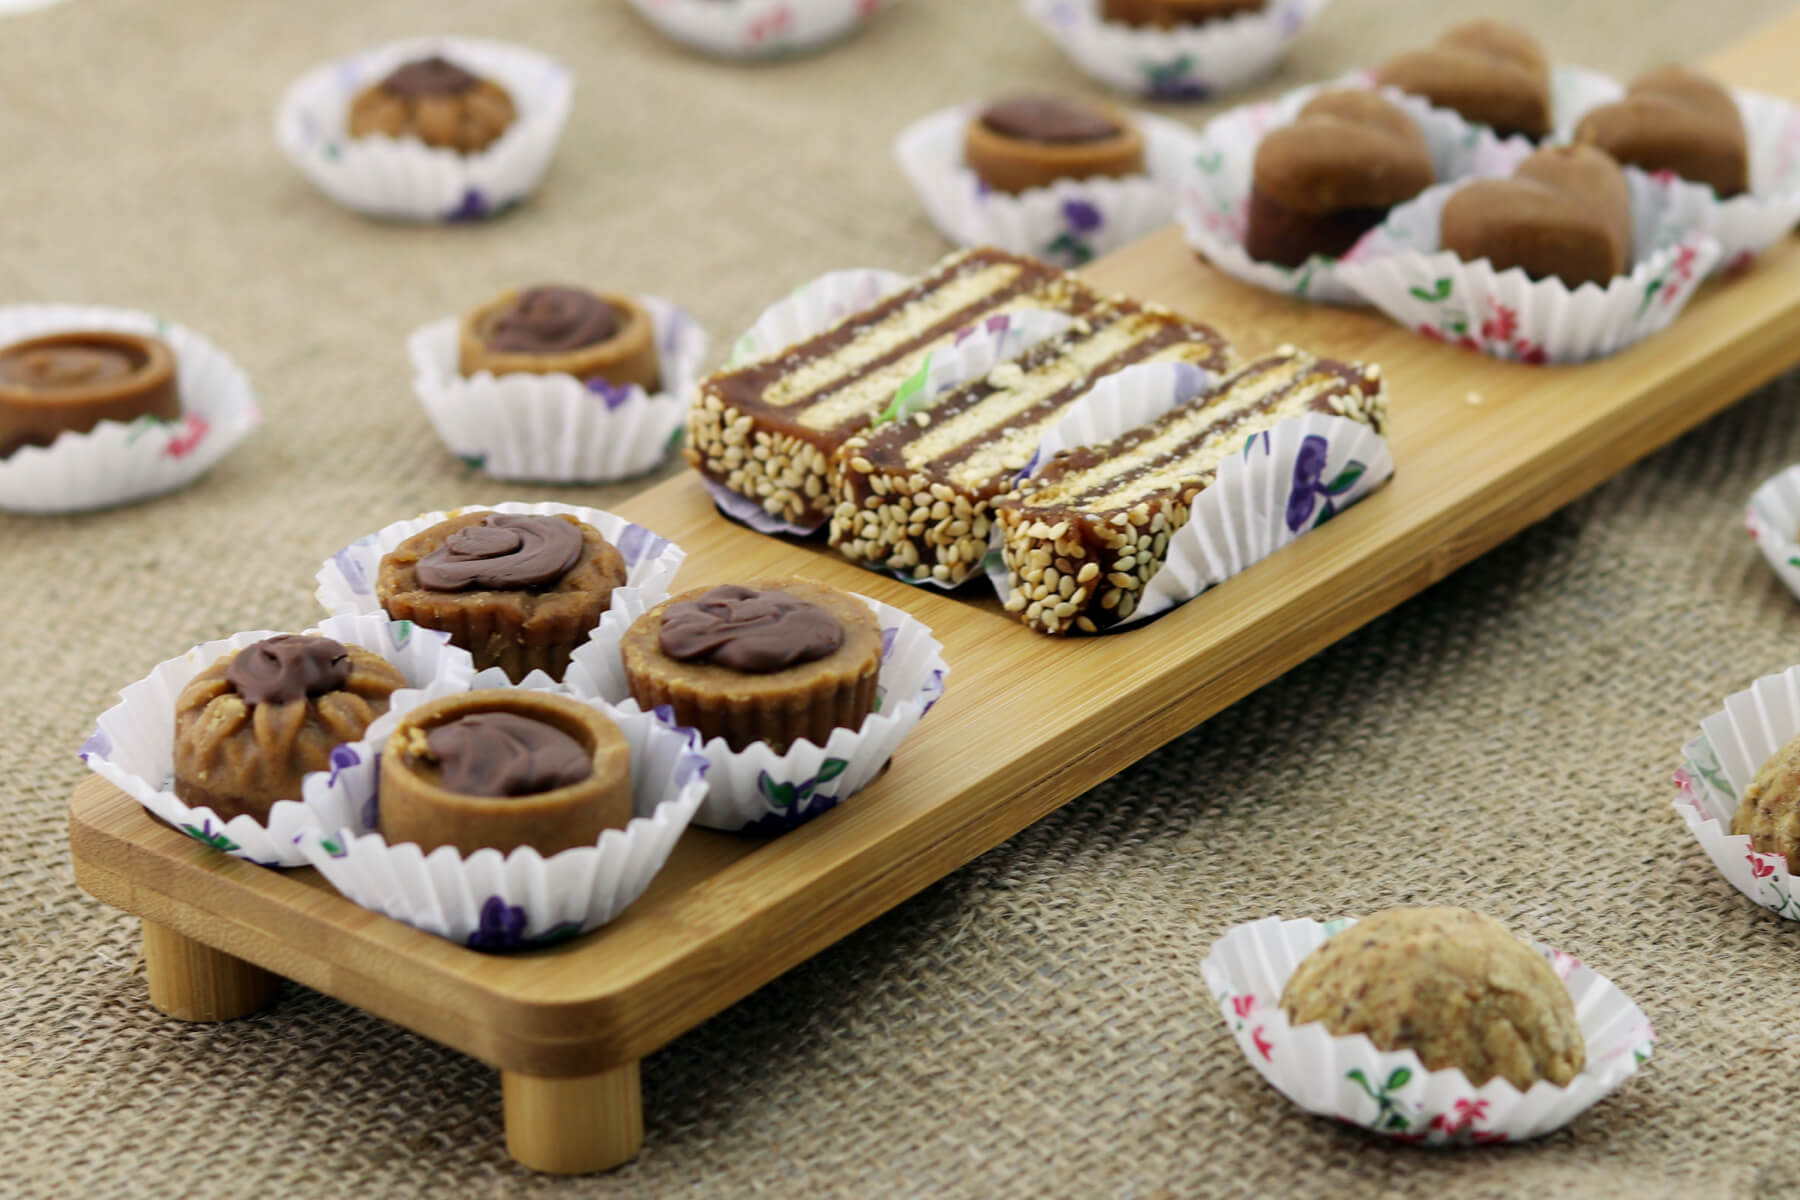 Ramadan treats displayed on a wooden platter.